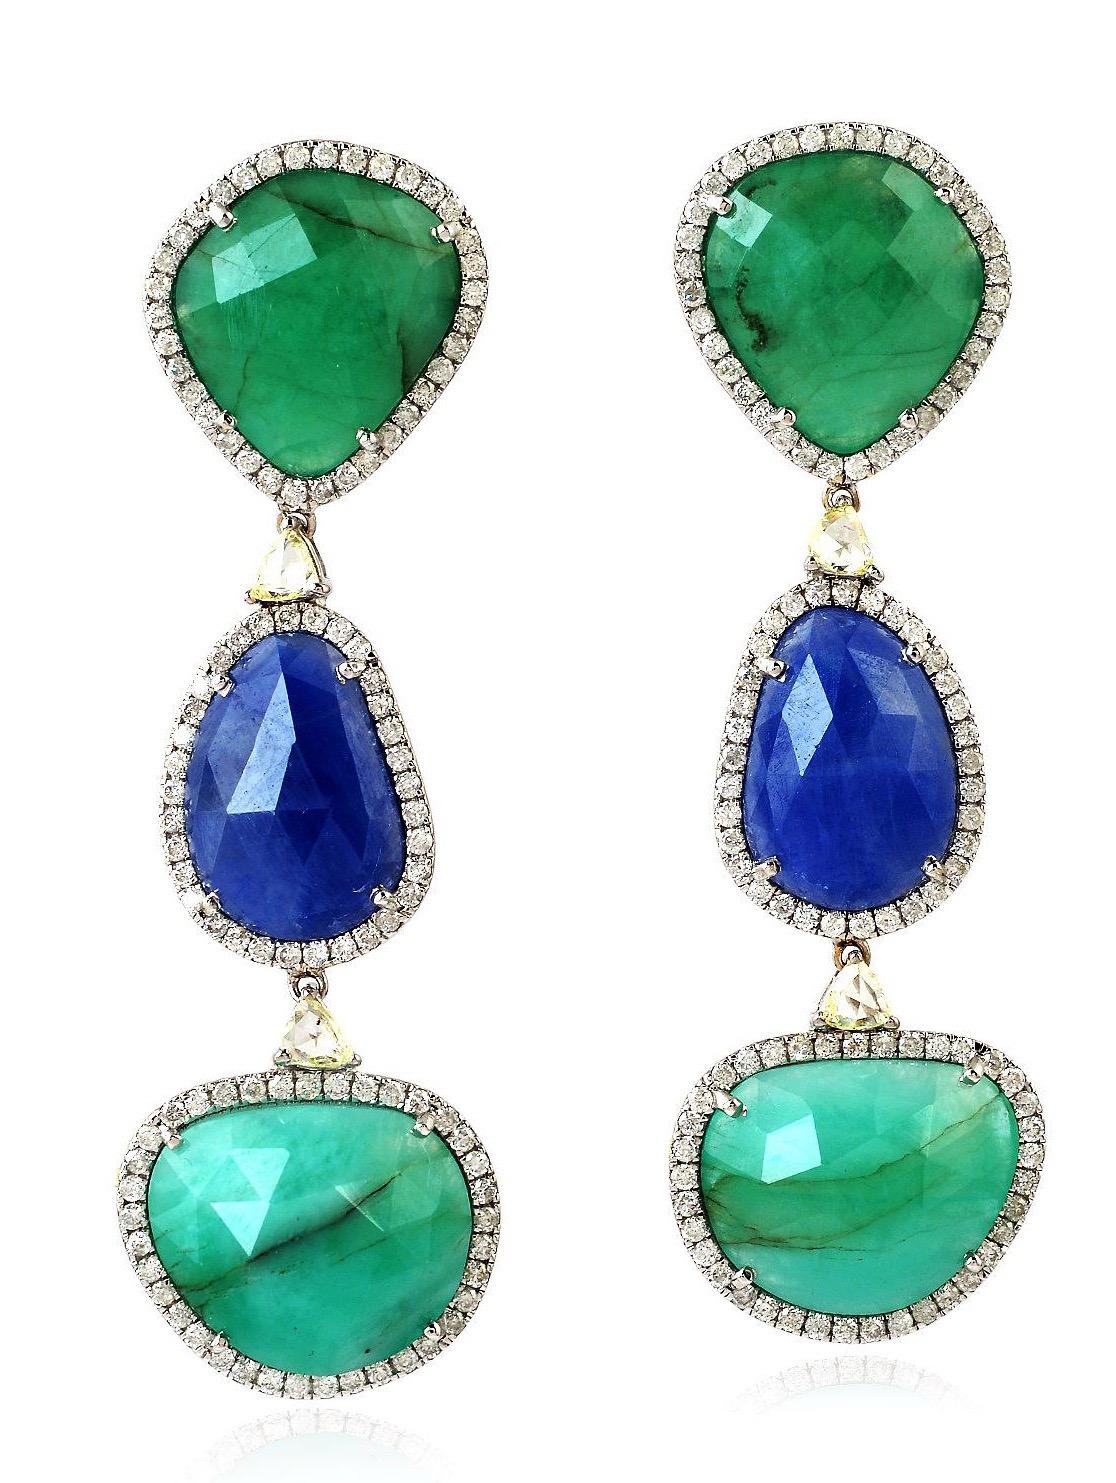 Mixed Cut 21.37 Carat Emerald Blue Sapphire Diamond 18 Karat Gold Earrings For Sale